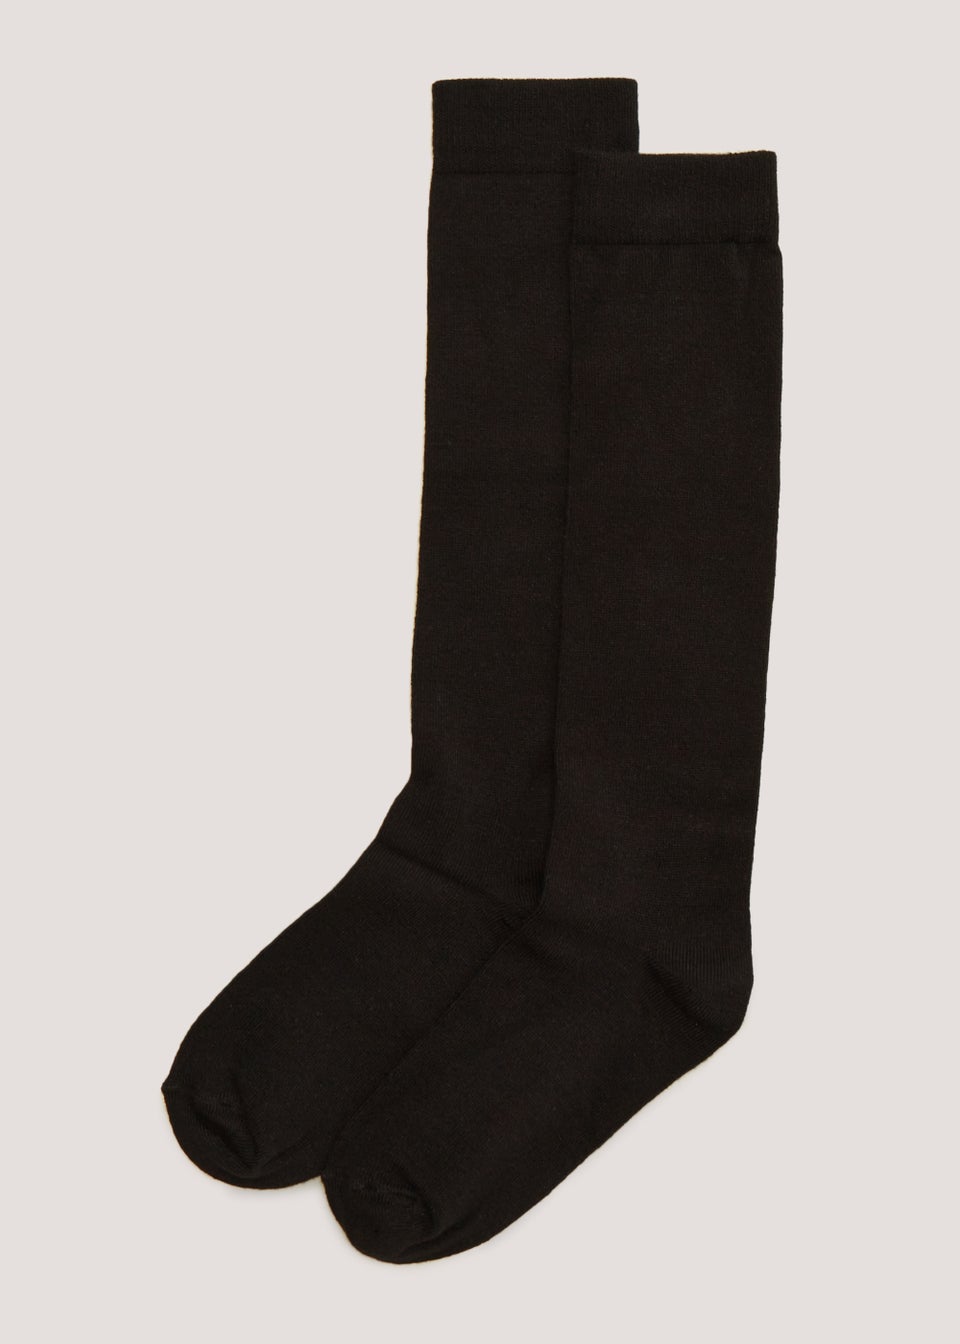 2 Pack Black Knee Socks